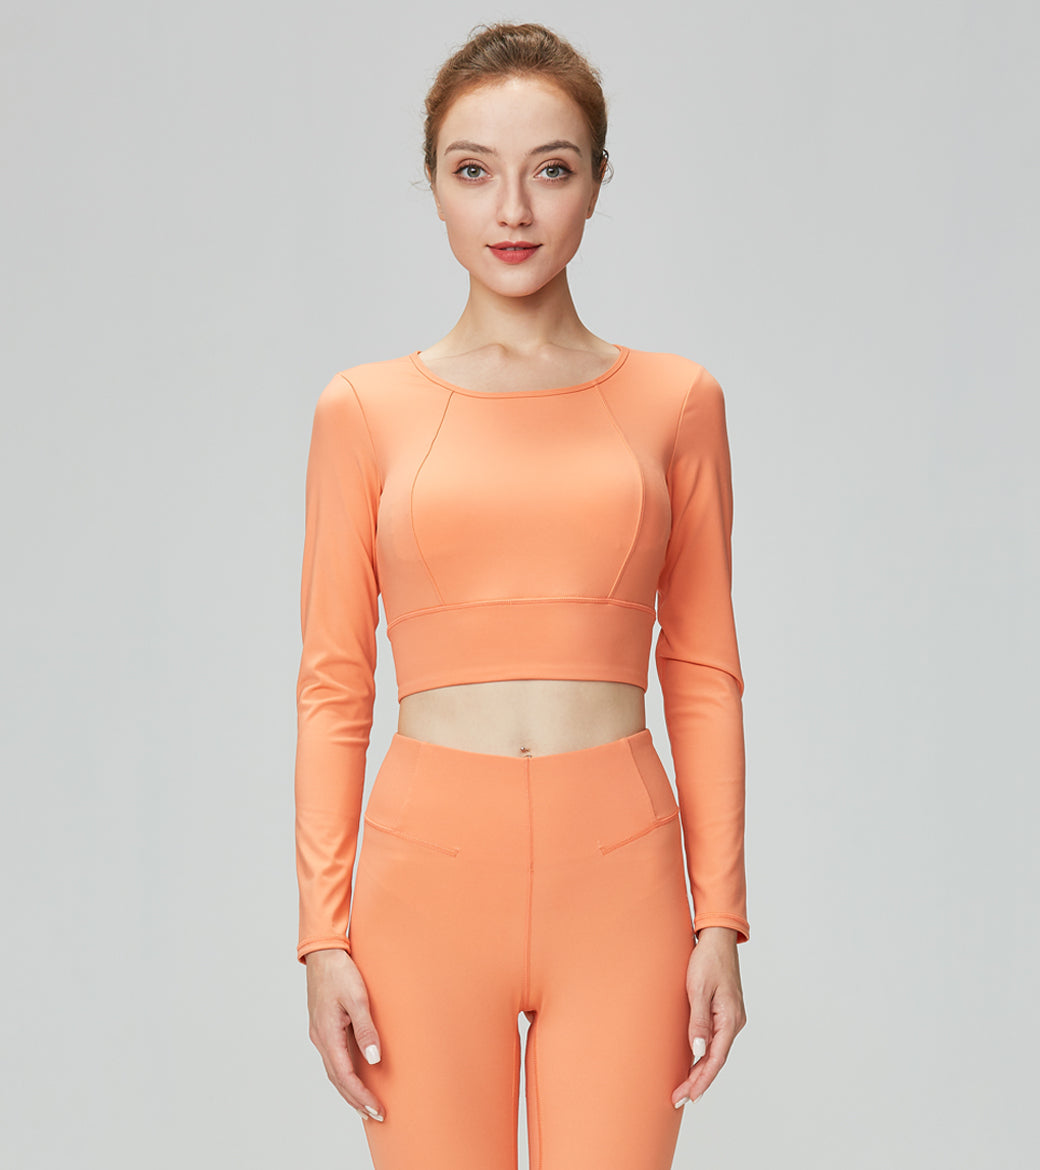 LOVESOFT Women Yoga Casual Slim Fit Long Sleeve Shirts-Orange